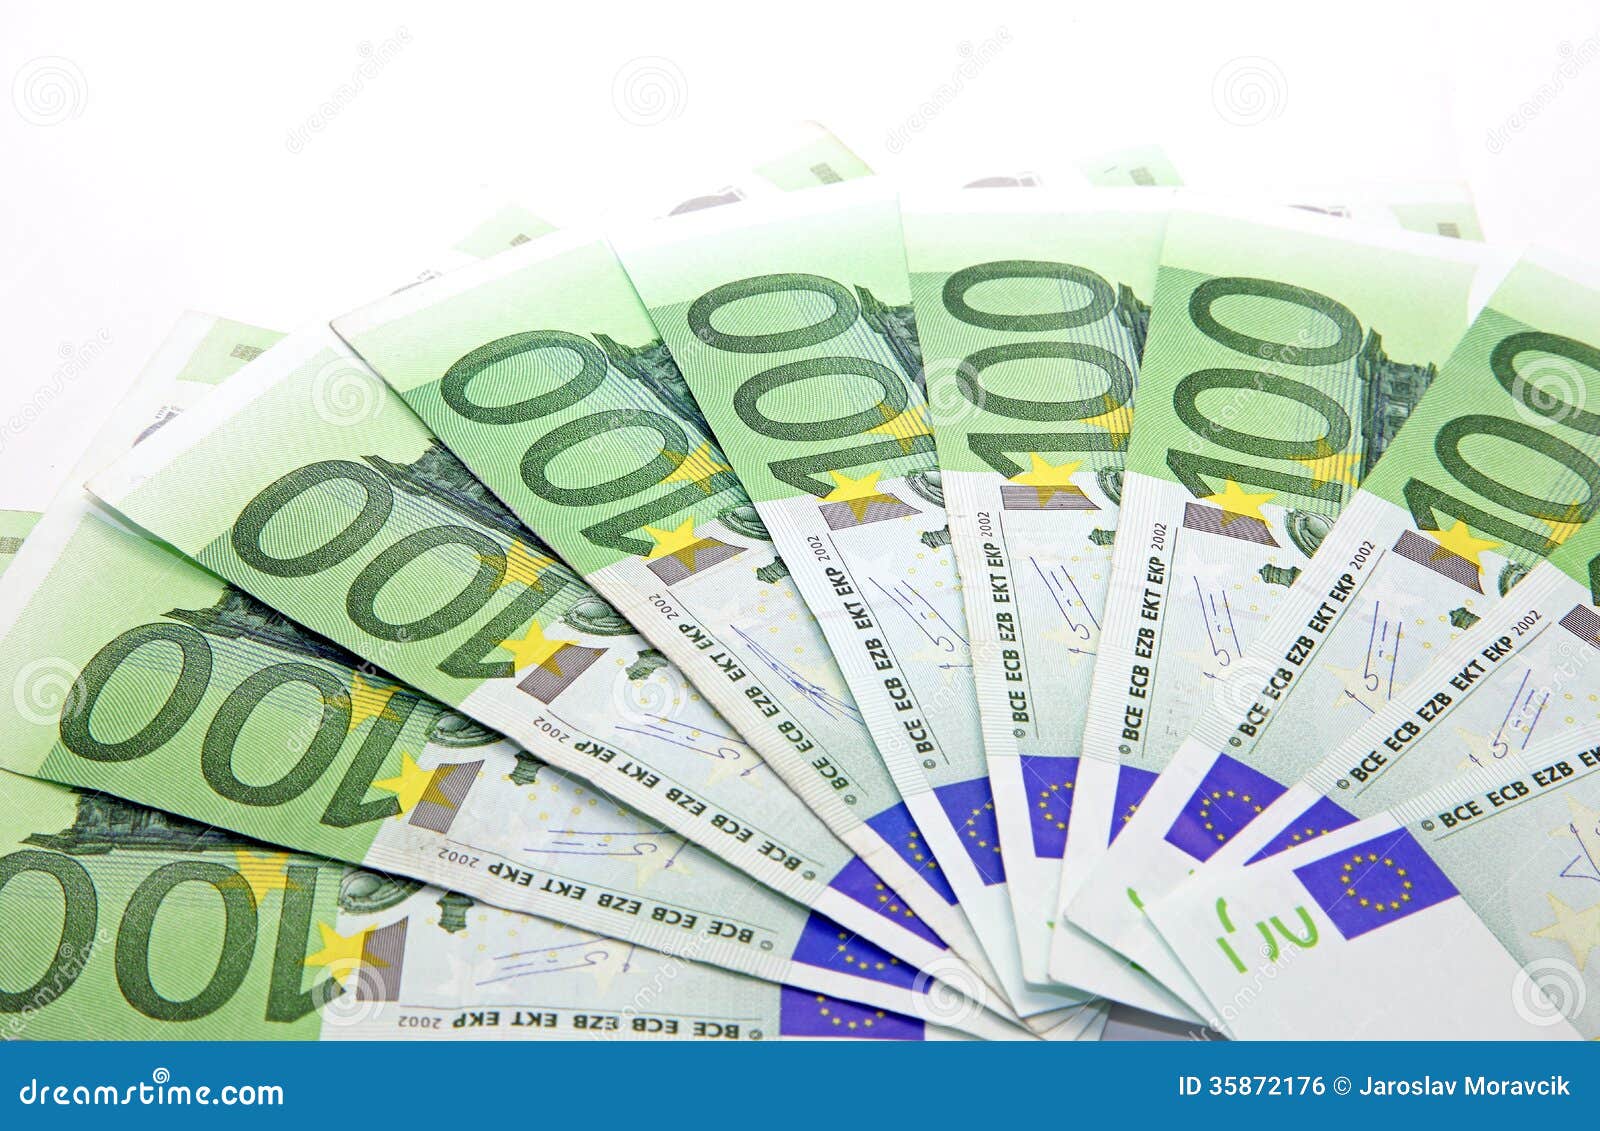 317 тысяч евро в рублях. 1000 Евро. 1000 Евро фото. 1000 Евро купюра фото. Тыща евро.